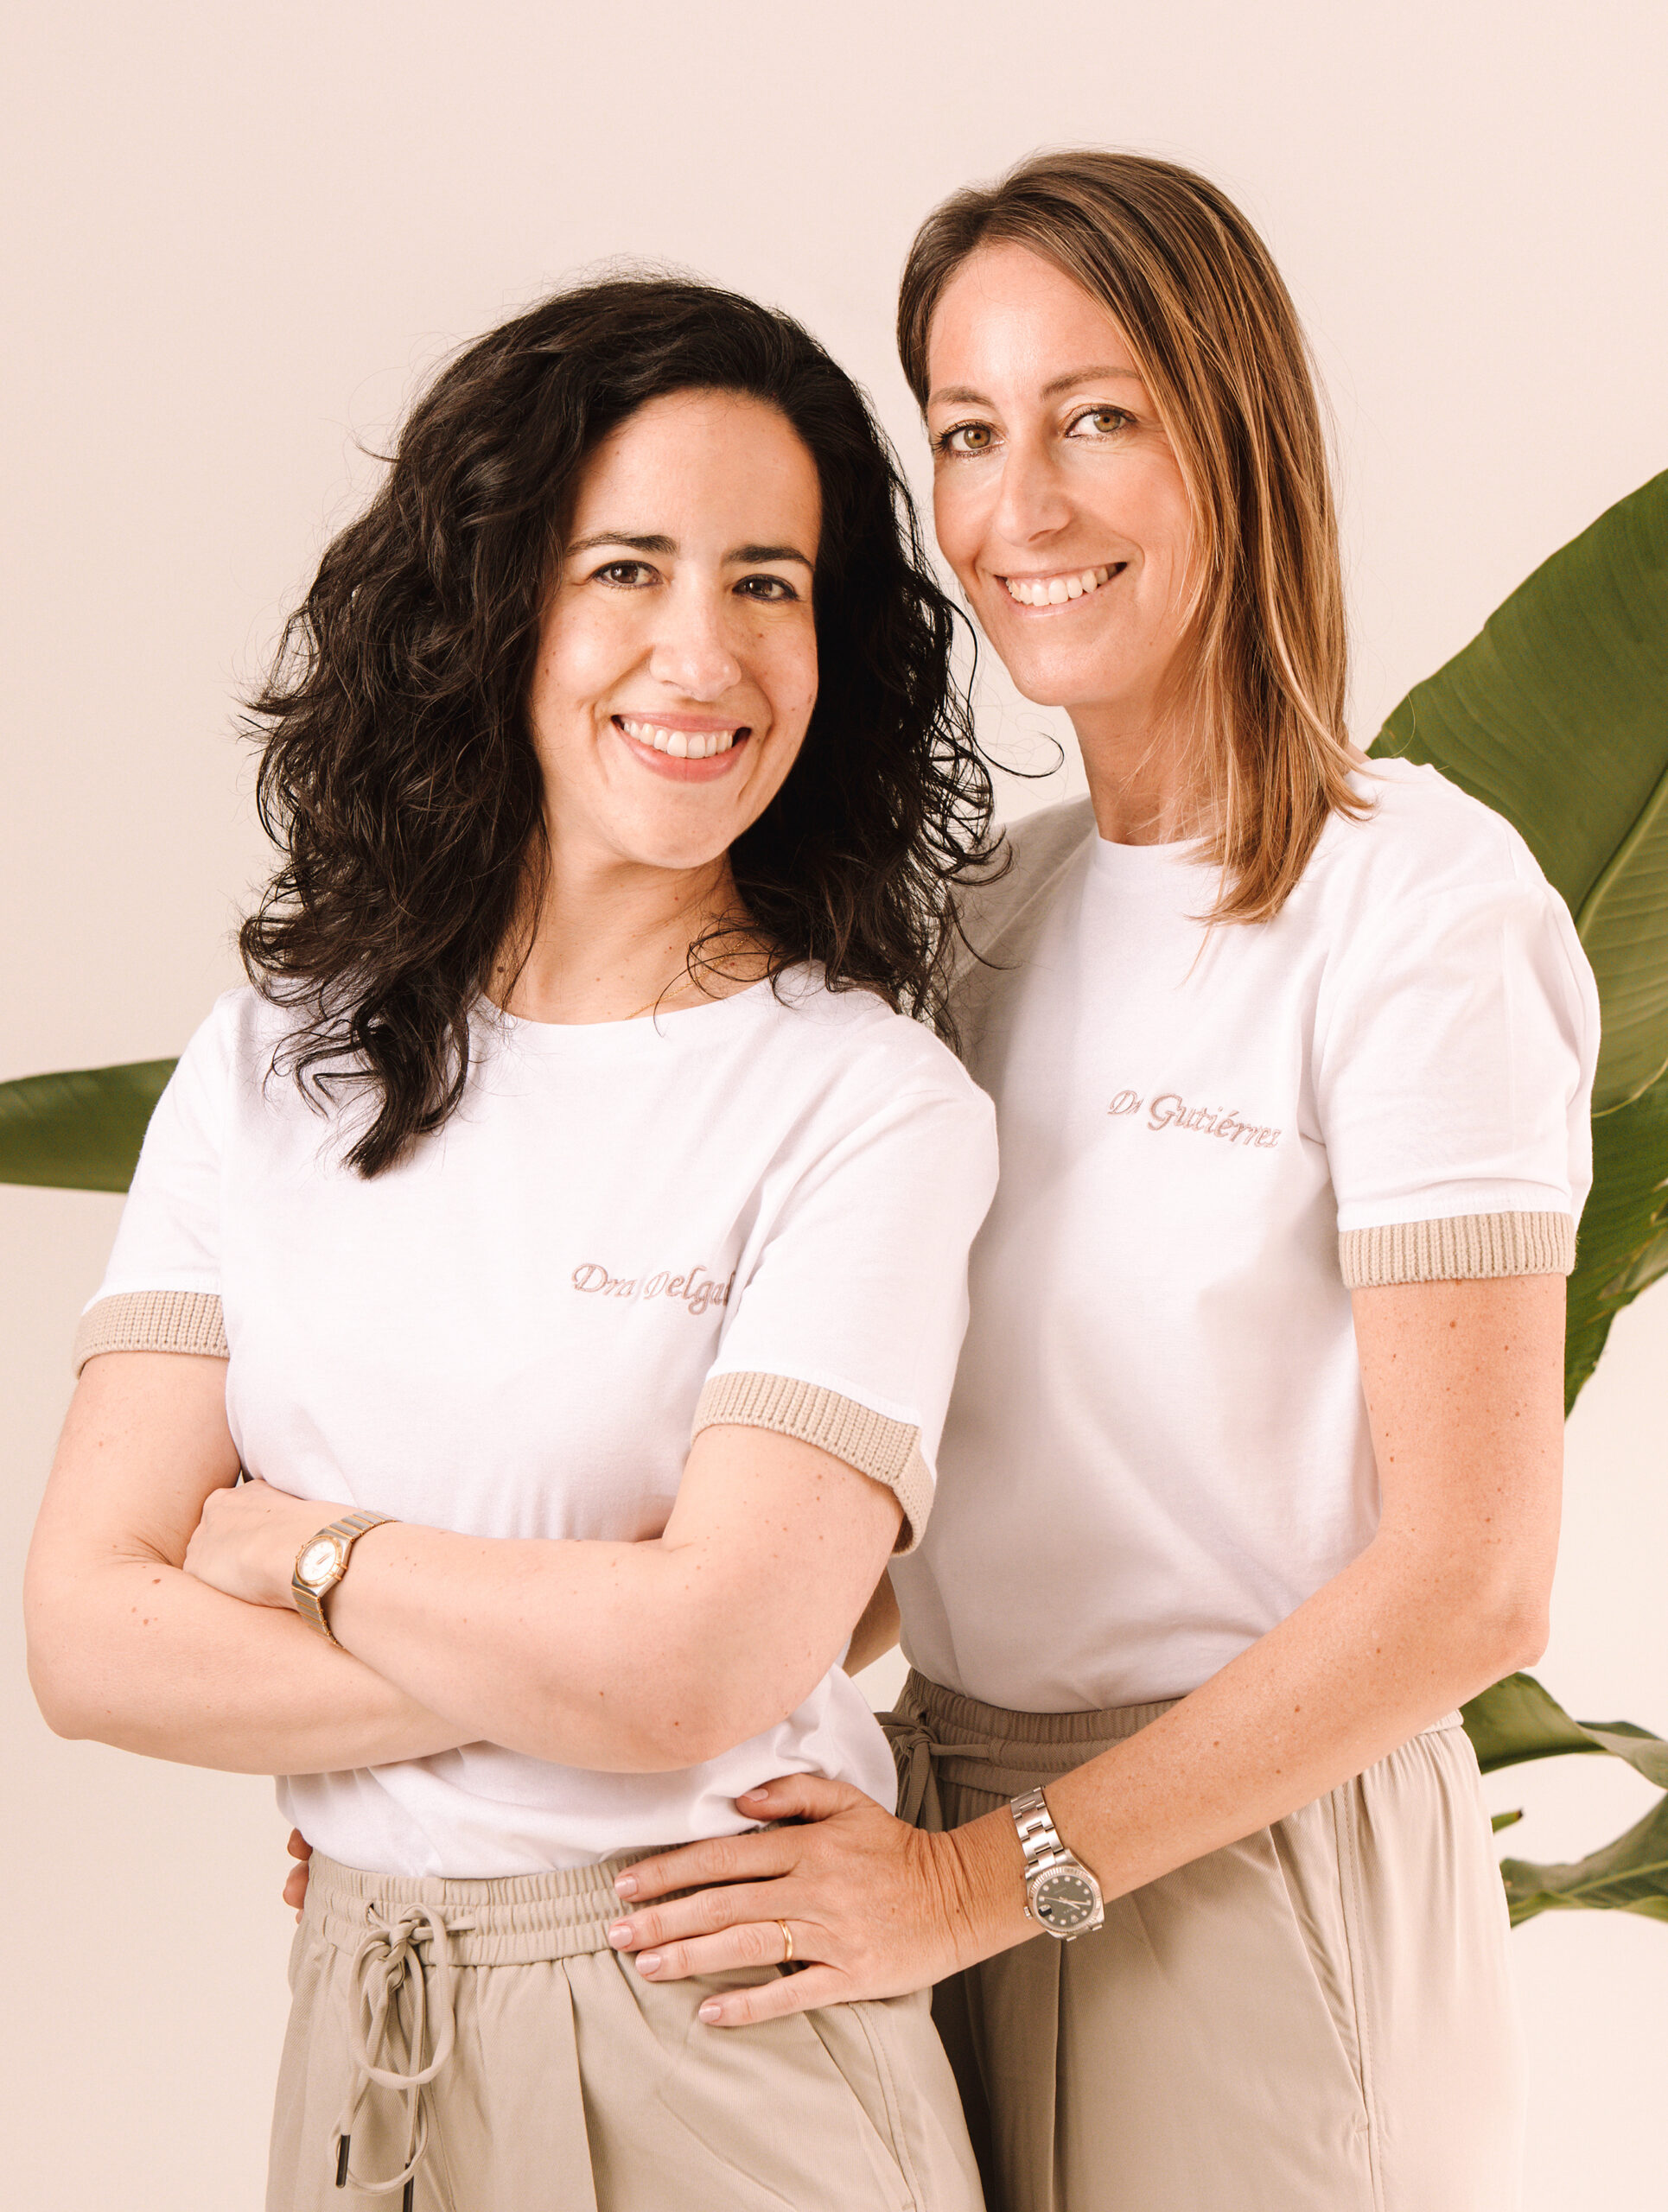 Entrevista a Beatriz María Delgado Plaza y Lucía Gutiérrez Sánchez, de Clínica Dental Delgado & Gutiérrez